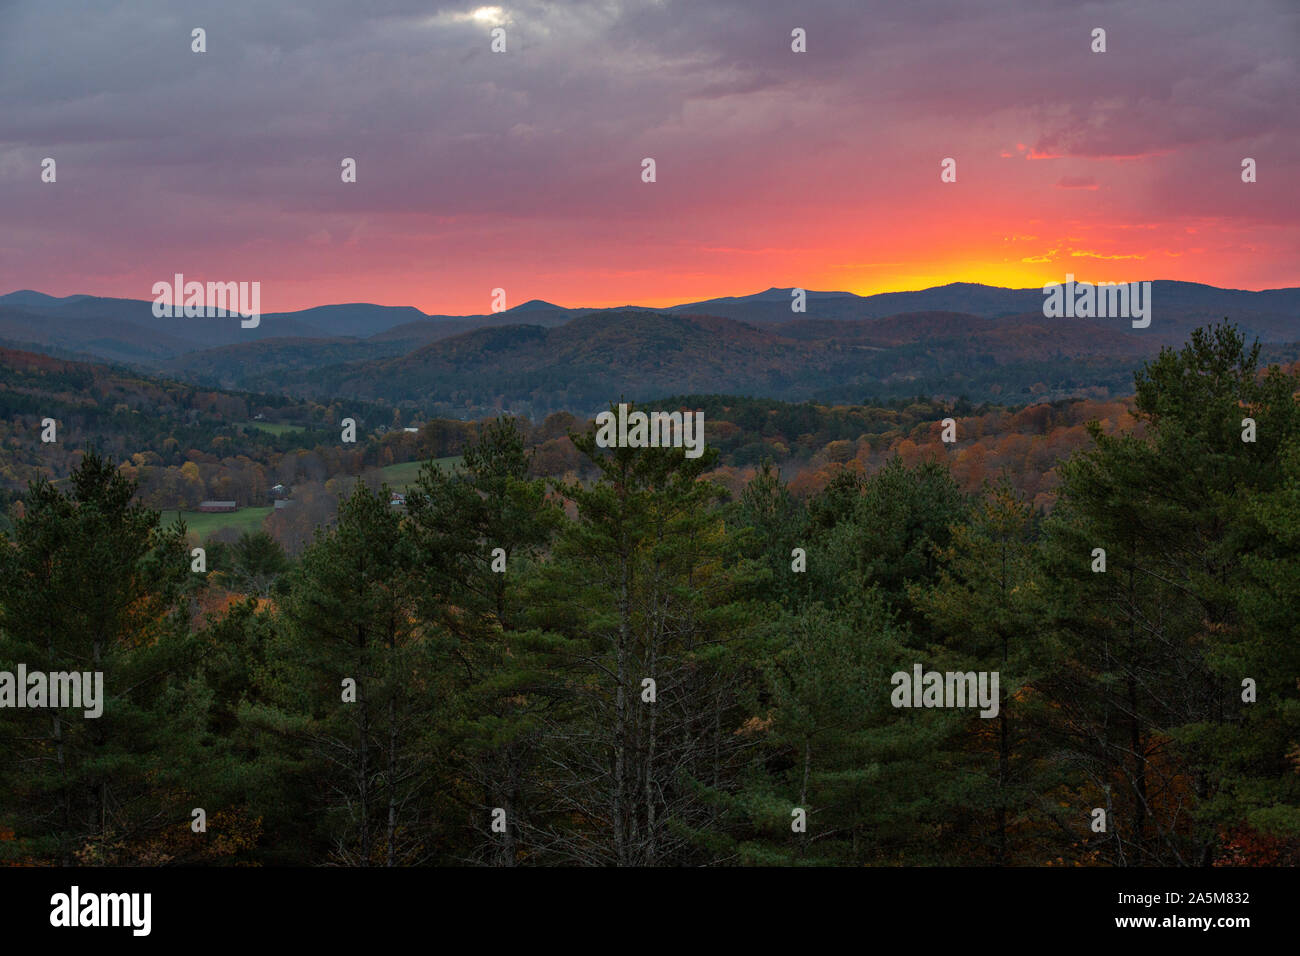 A dramatic fall sunset behind hills near Quechee, Vermont. Stock Photo